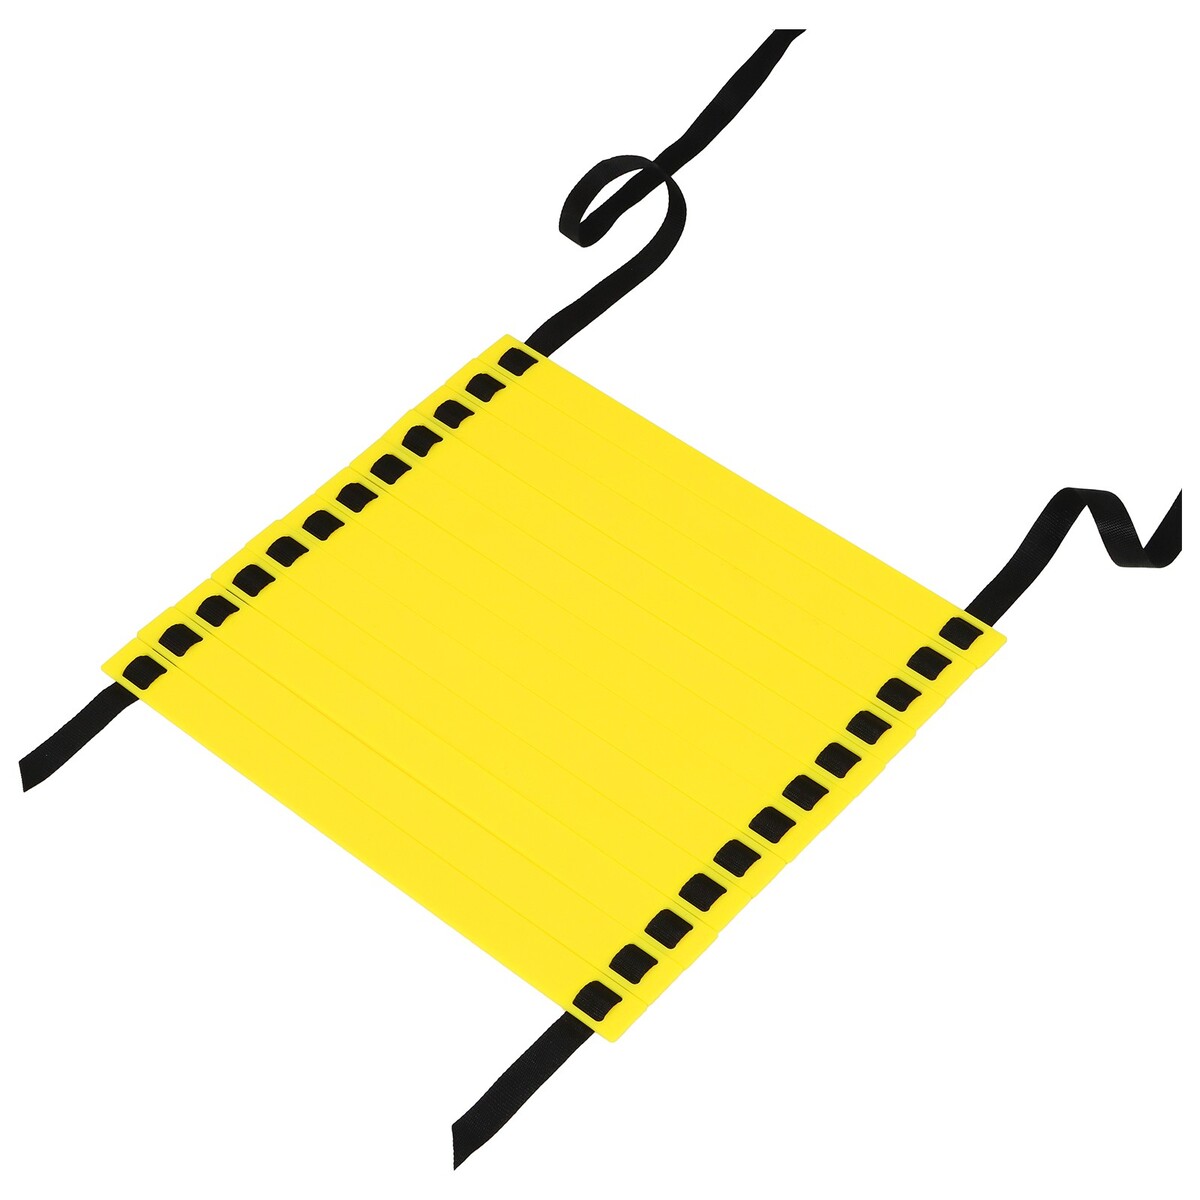 Координационная лестница onlytop, 6 м, толщина 2 мм, цвет желтый лестница координационная atemi длина 6м aal 619 1